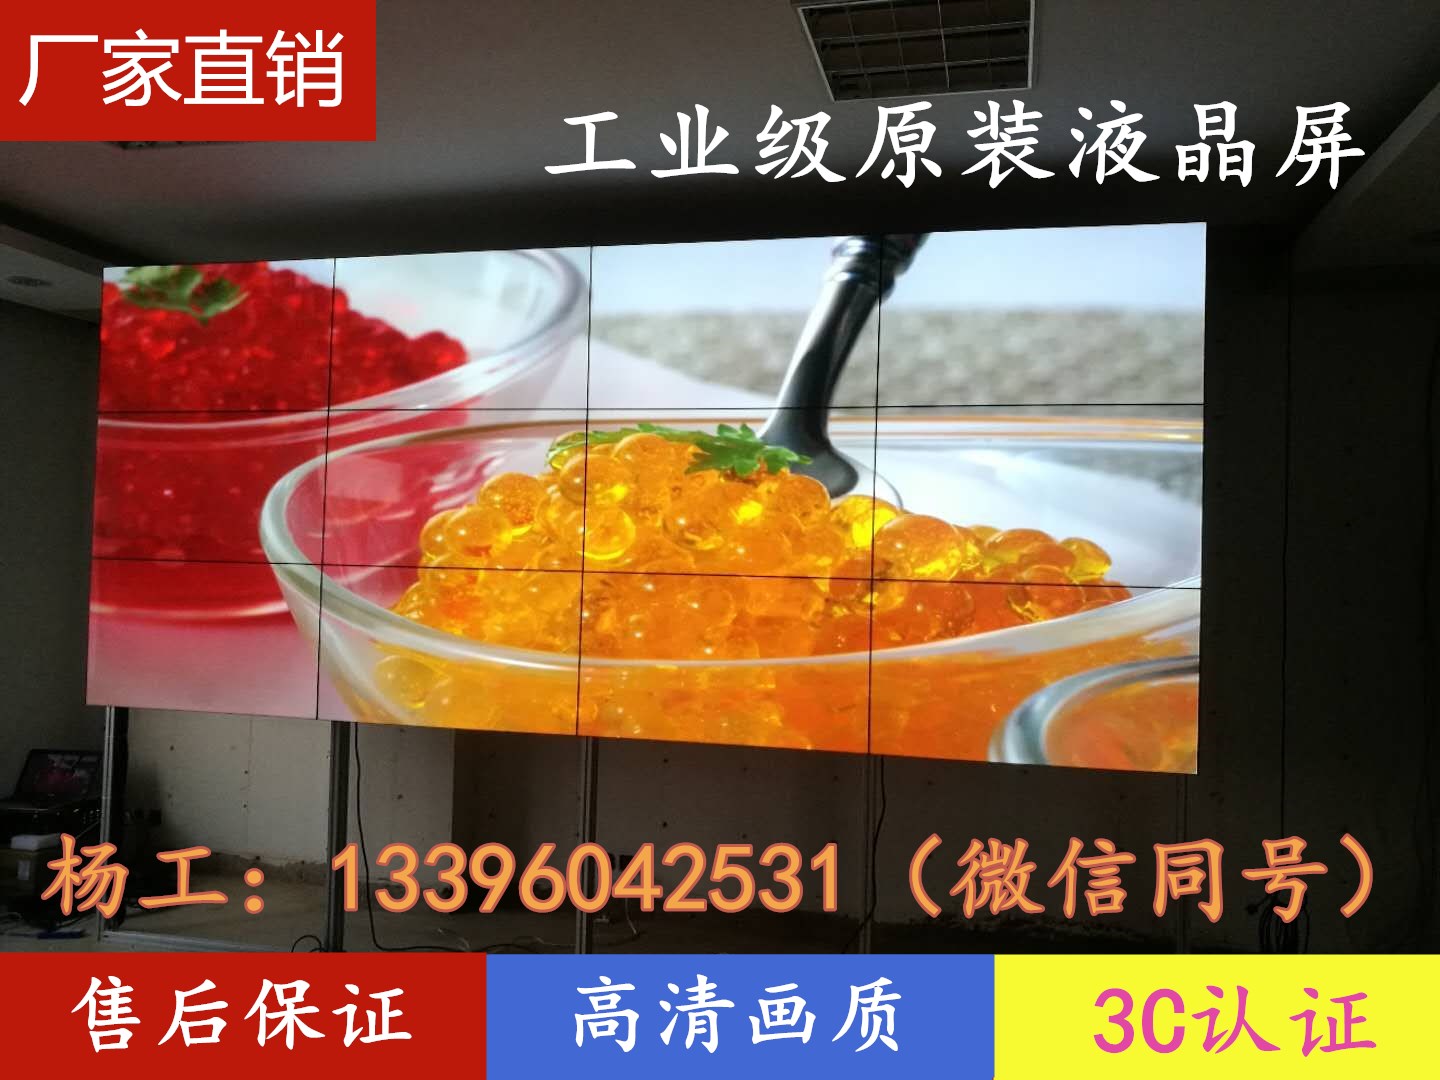 Hefei LG 55 inch 1.8 seam LCD splicing screen large screen monitor display LED TV video wall